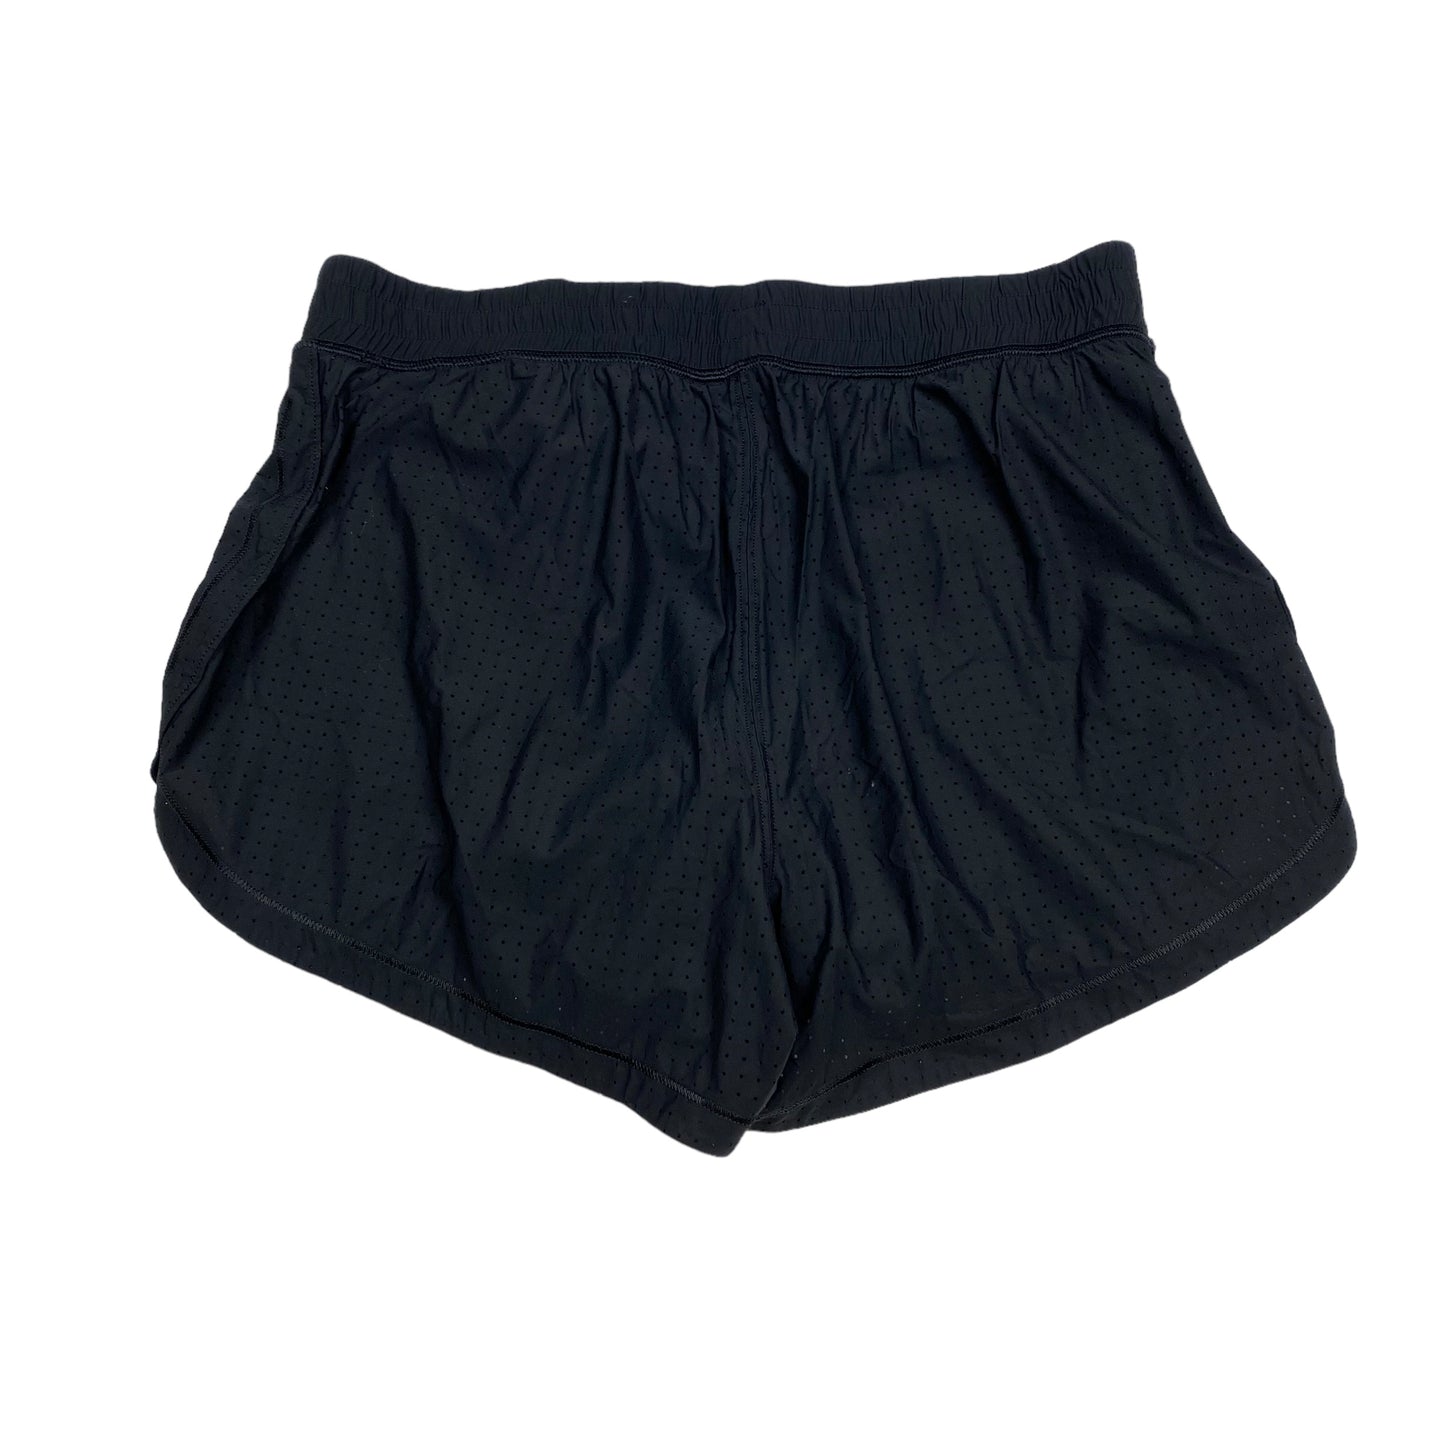 Athletic Shorts By Gapfit  Size: M